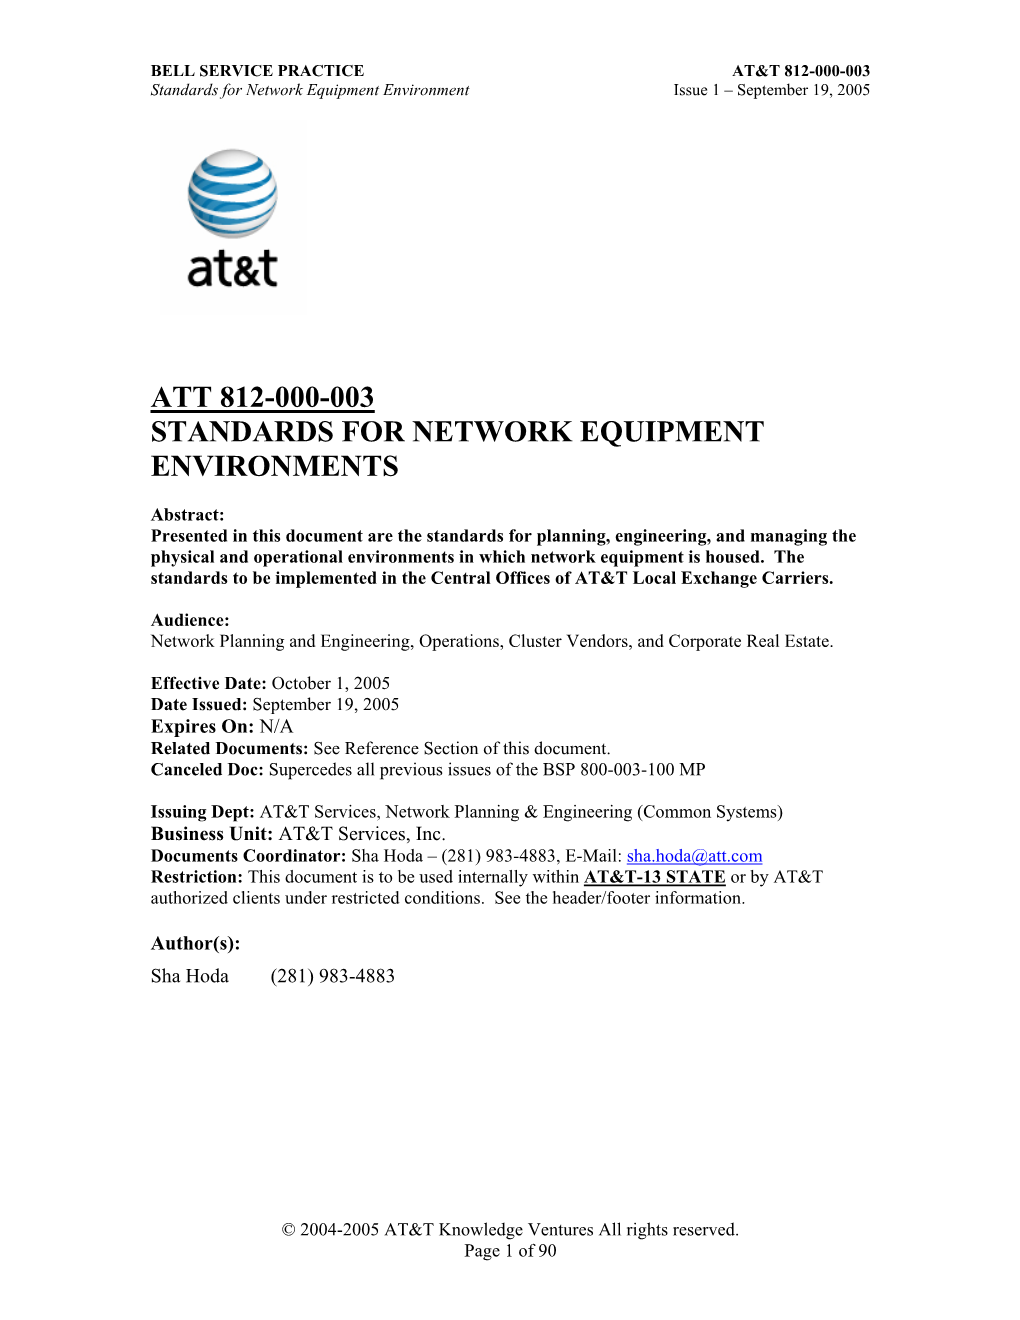 Att 812-000-003 Standards for Network Equipment Environments